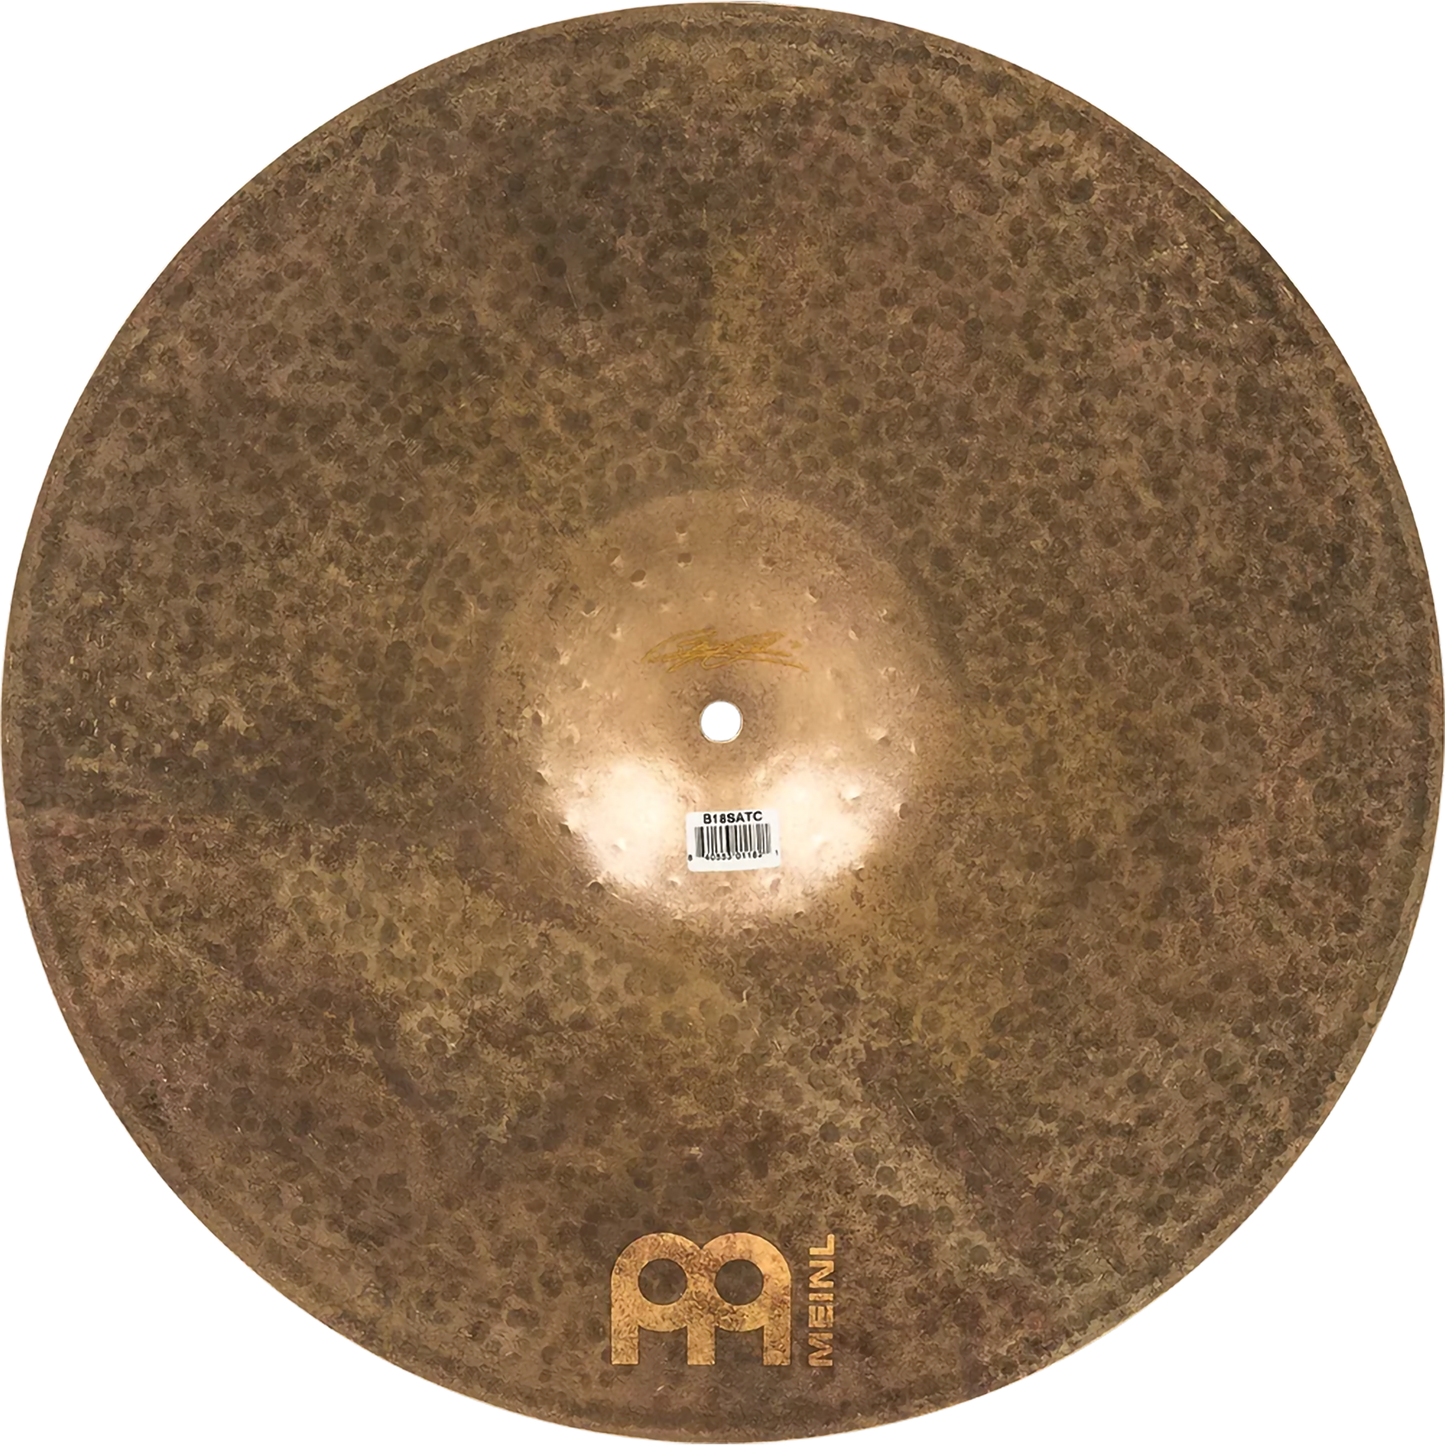 Meinl 18” Byzance Vintage Sand Thin Crash Cymbal